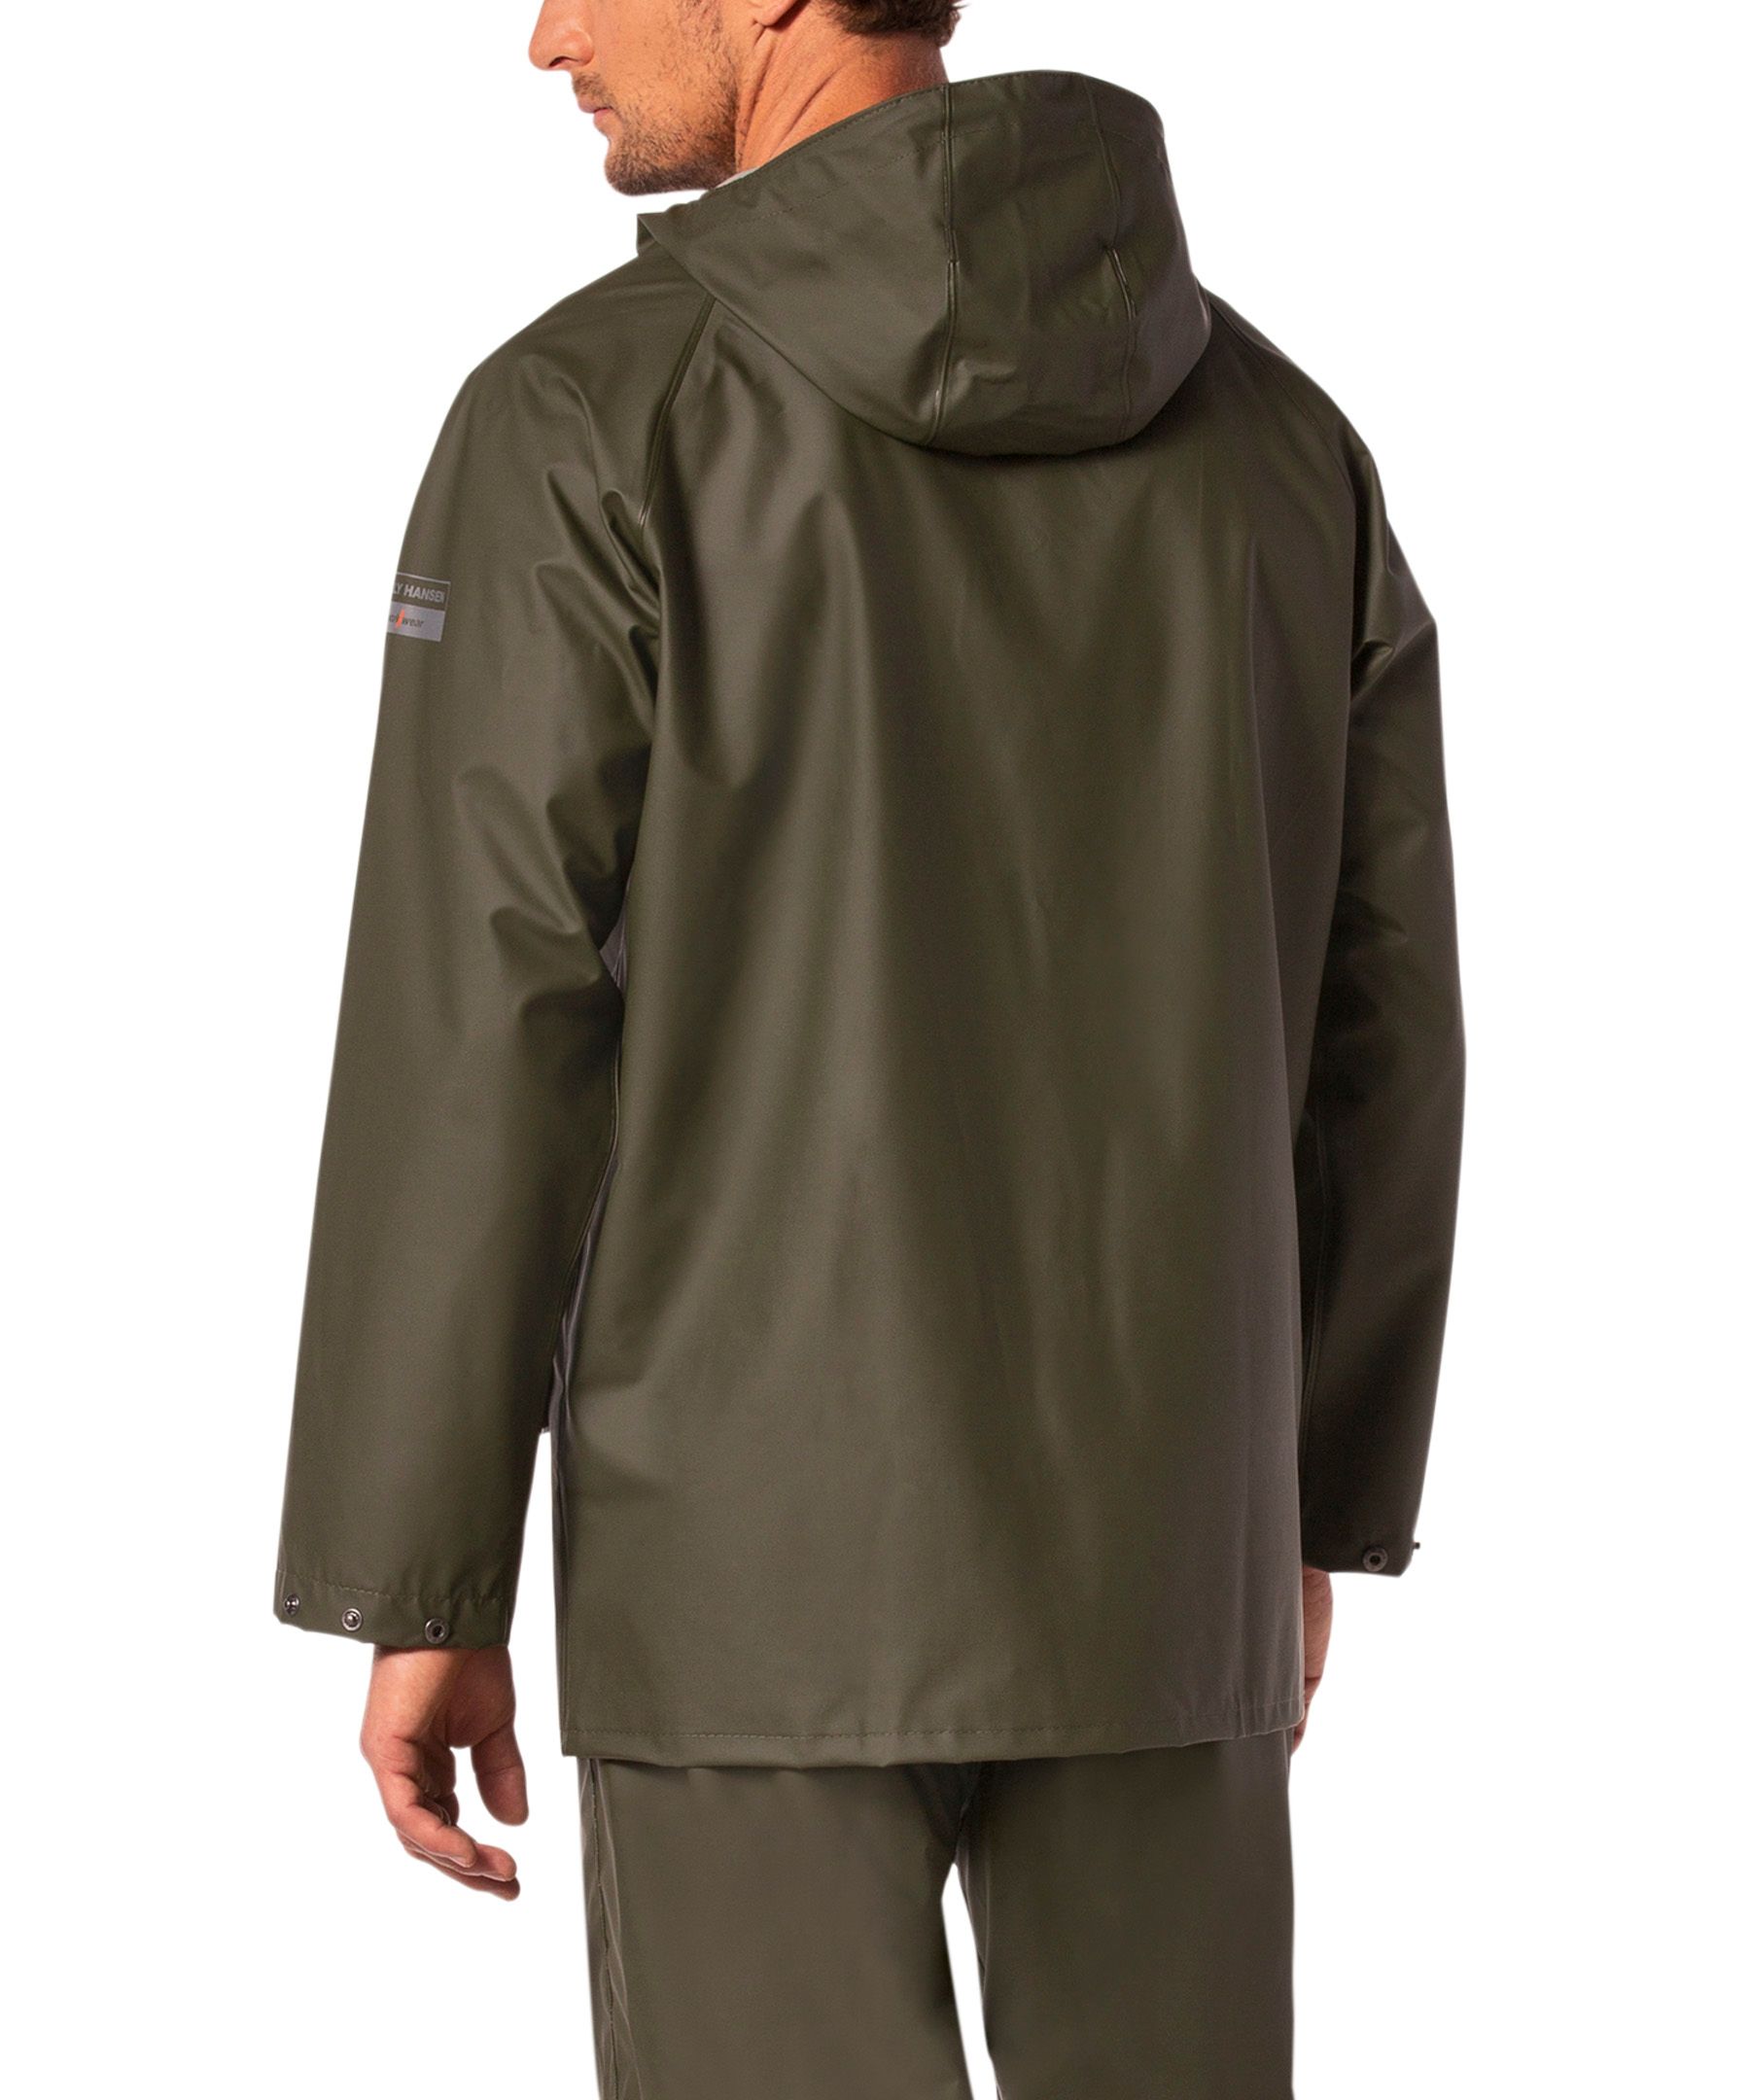 Helly Hansen Rain Jacket: Fishing Waterproof Storm Collection Men's -  Western Safety